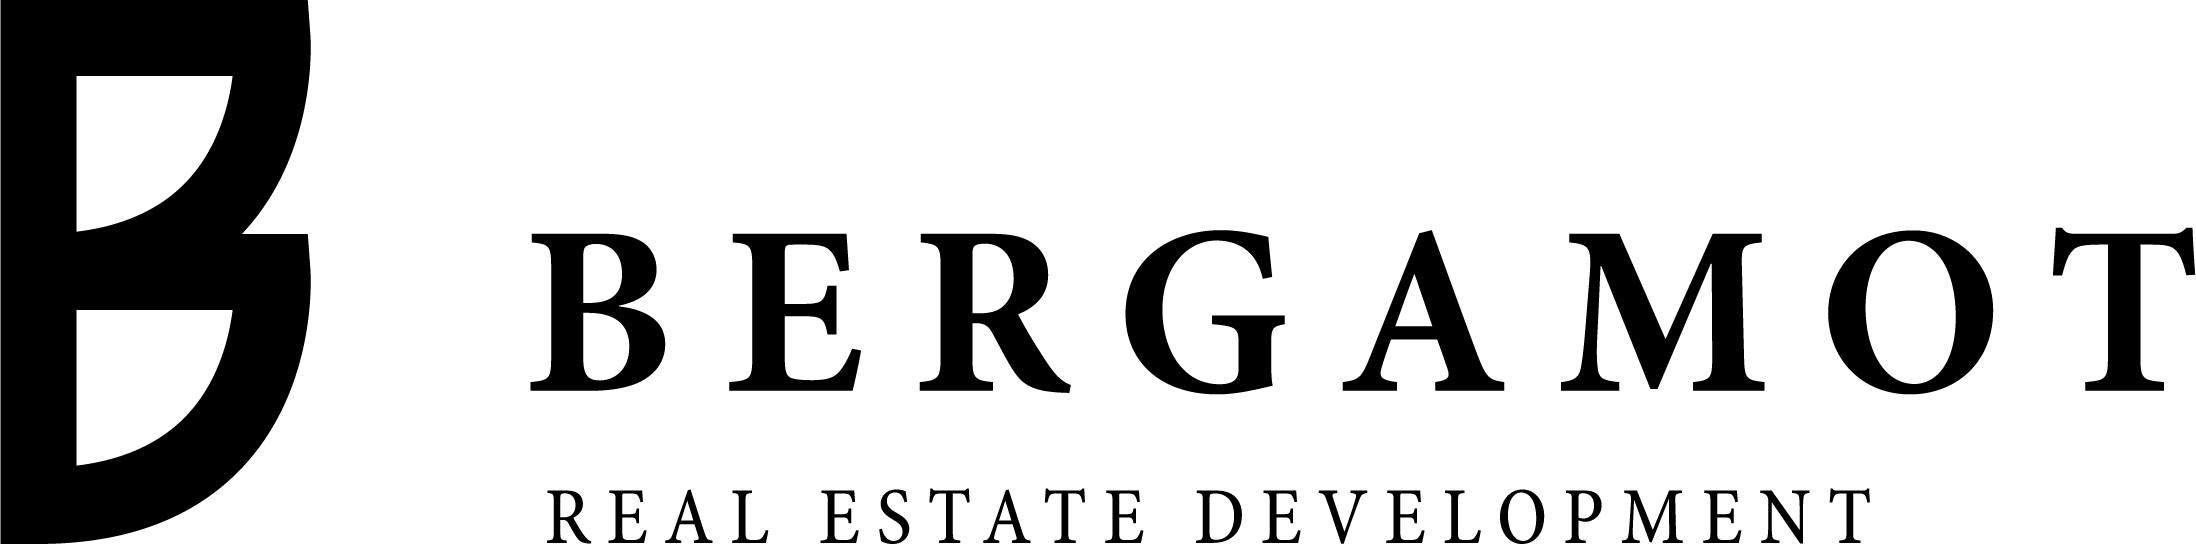 Bergamot logo